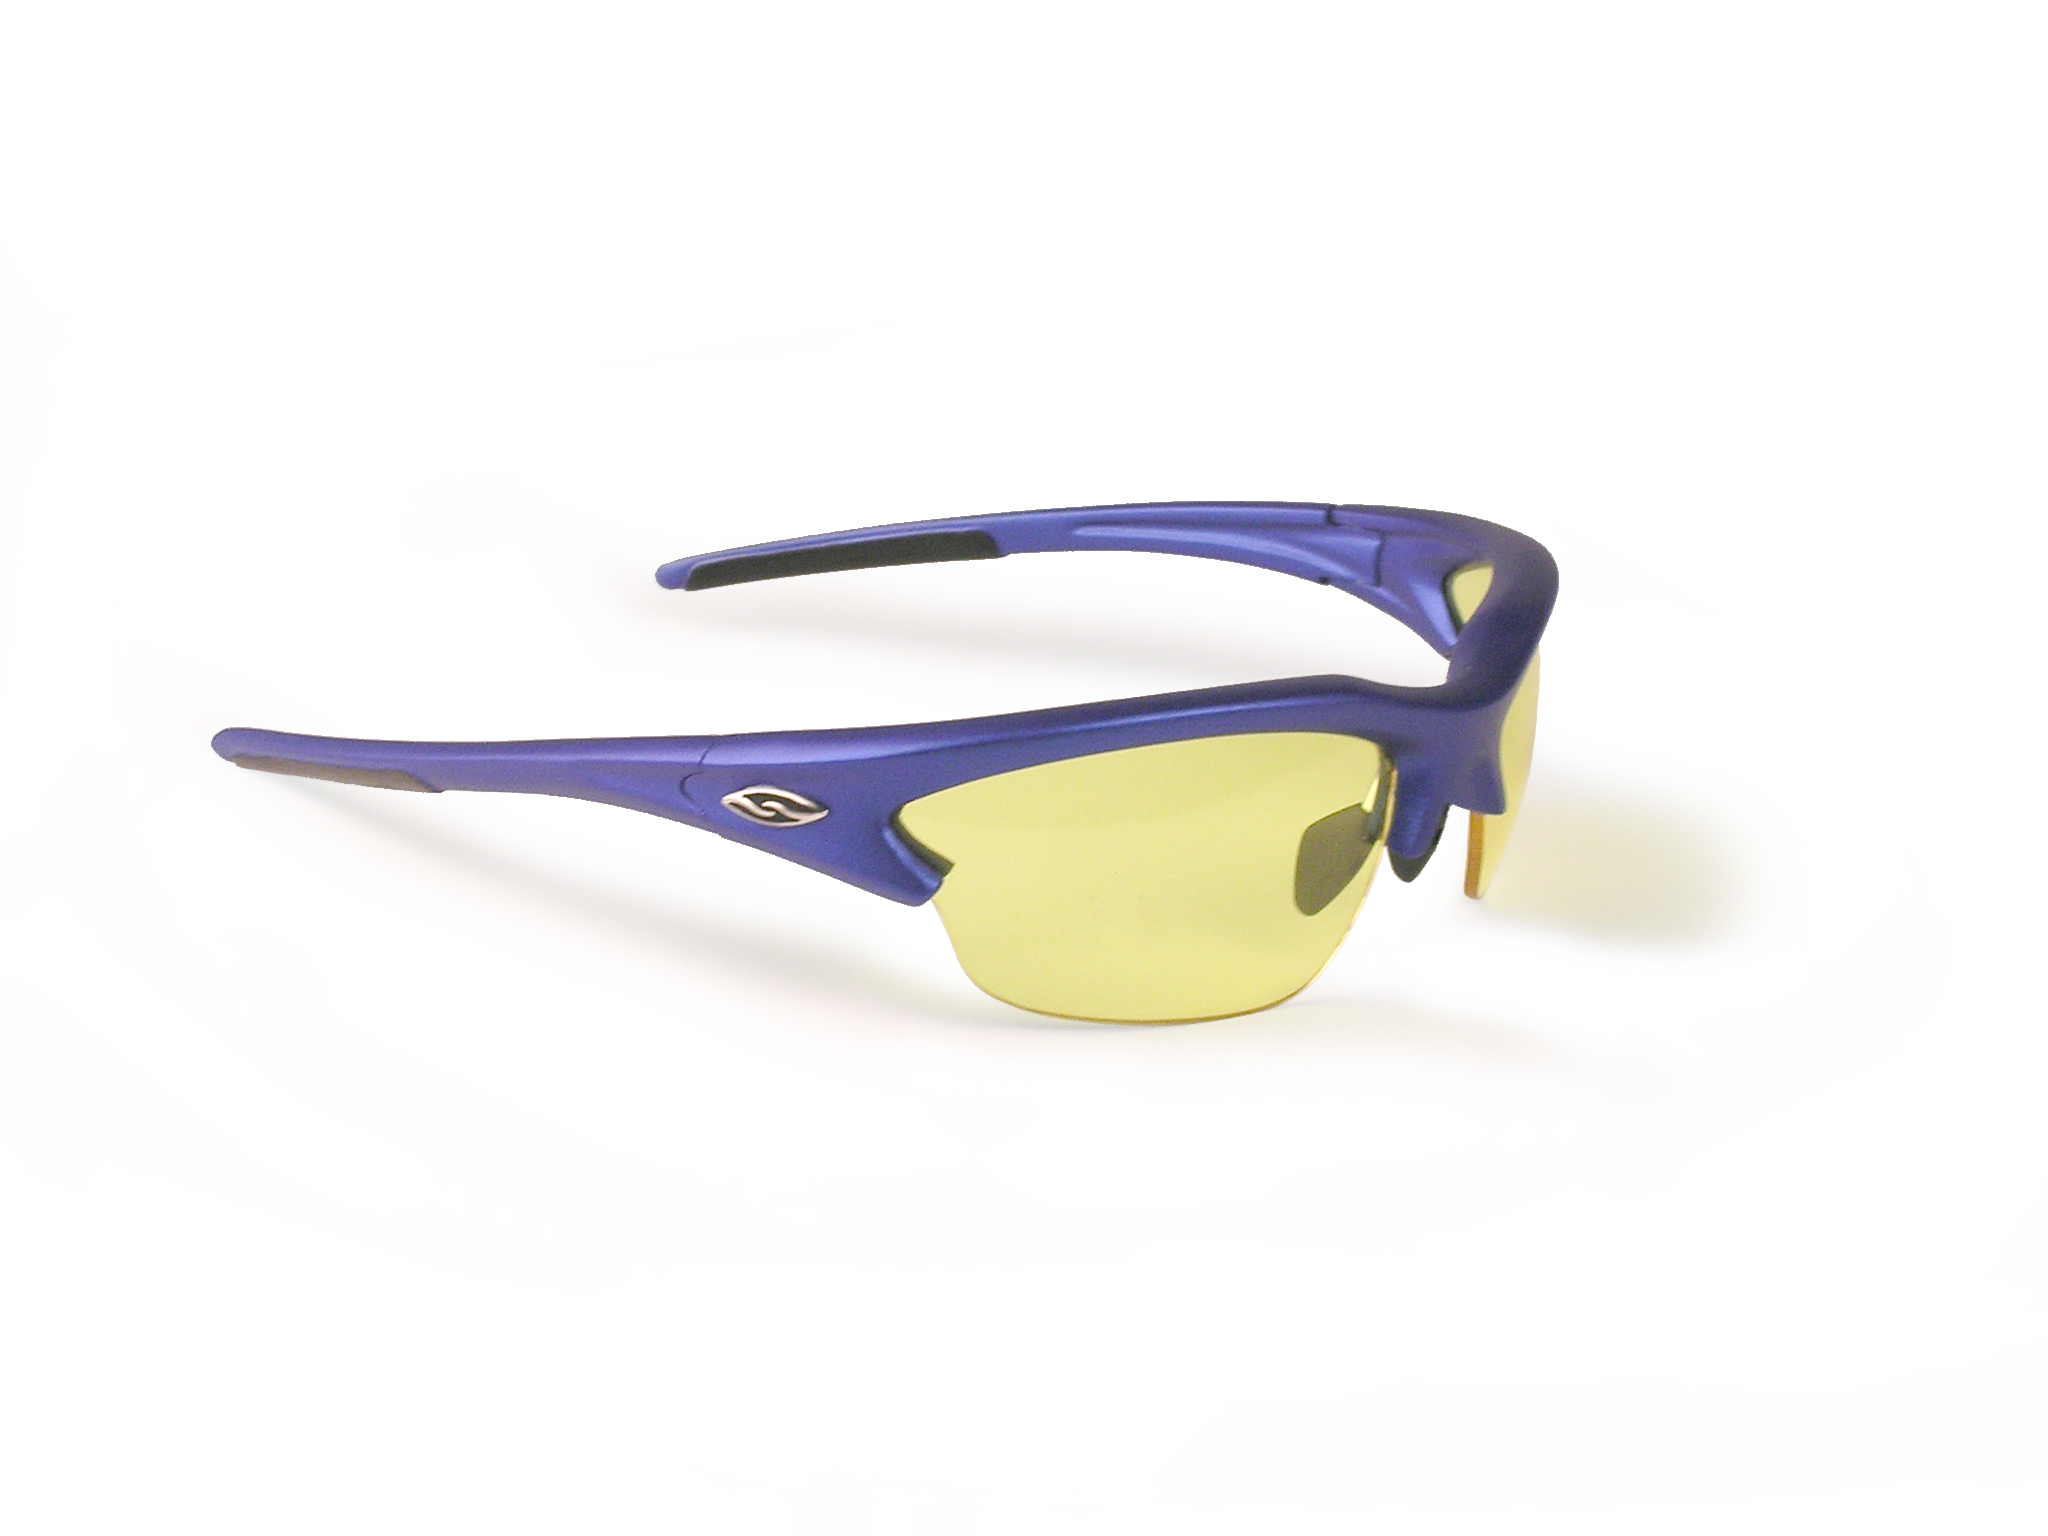 Smith Optics Industrial Design Slide 4 - Marketing Photo of Smith Optics Sunglasses